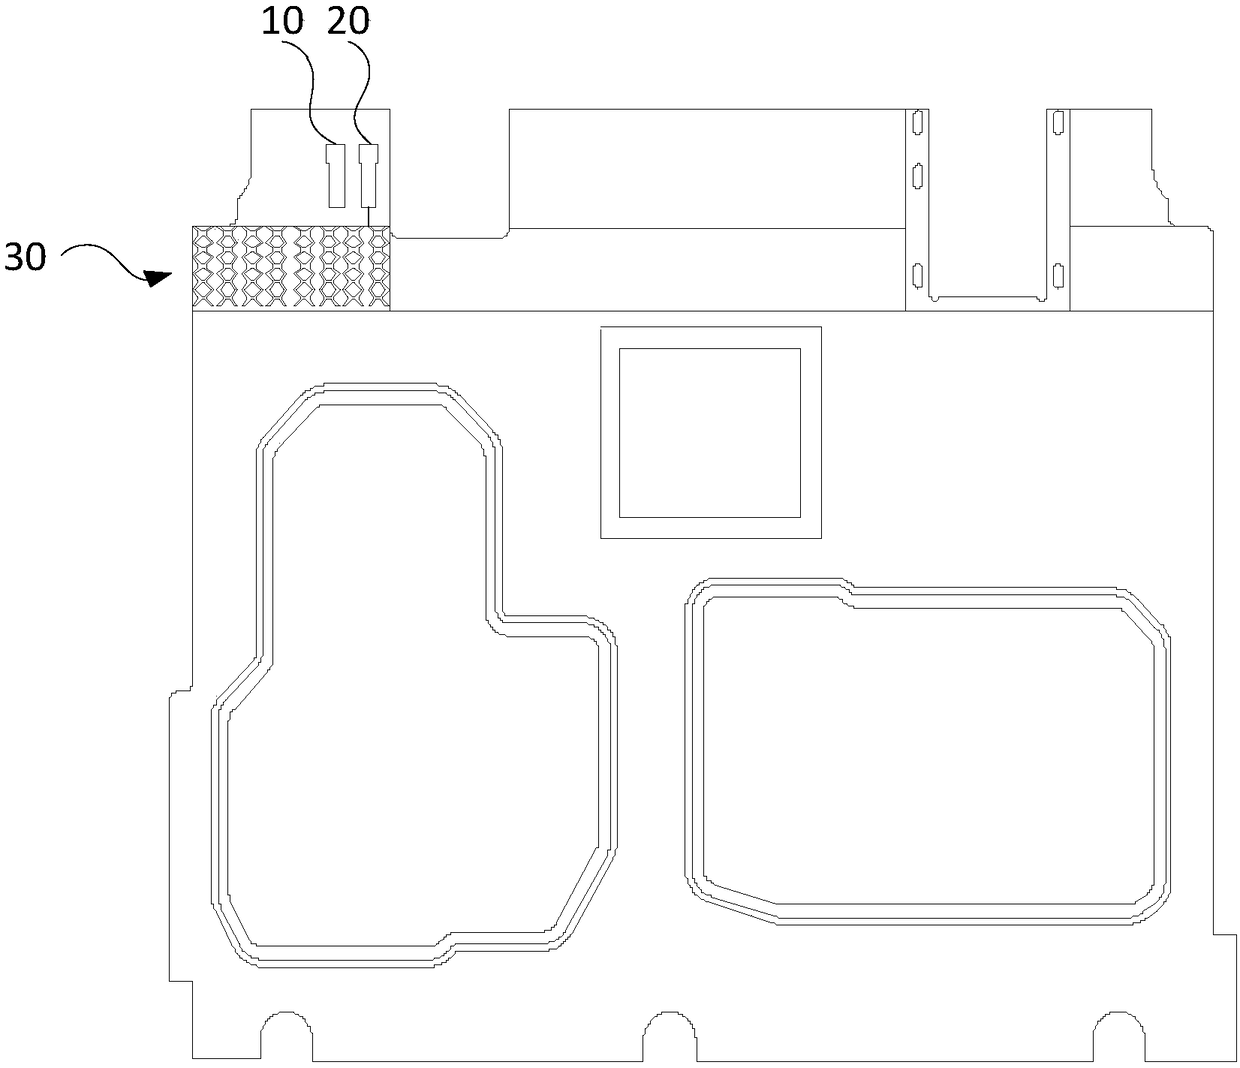 Printed circuit board and terminal